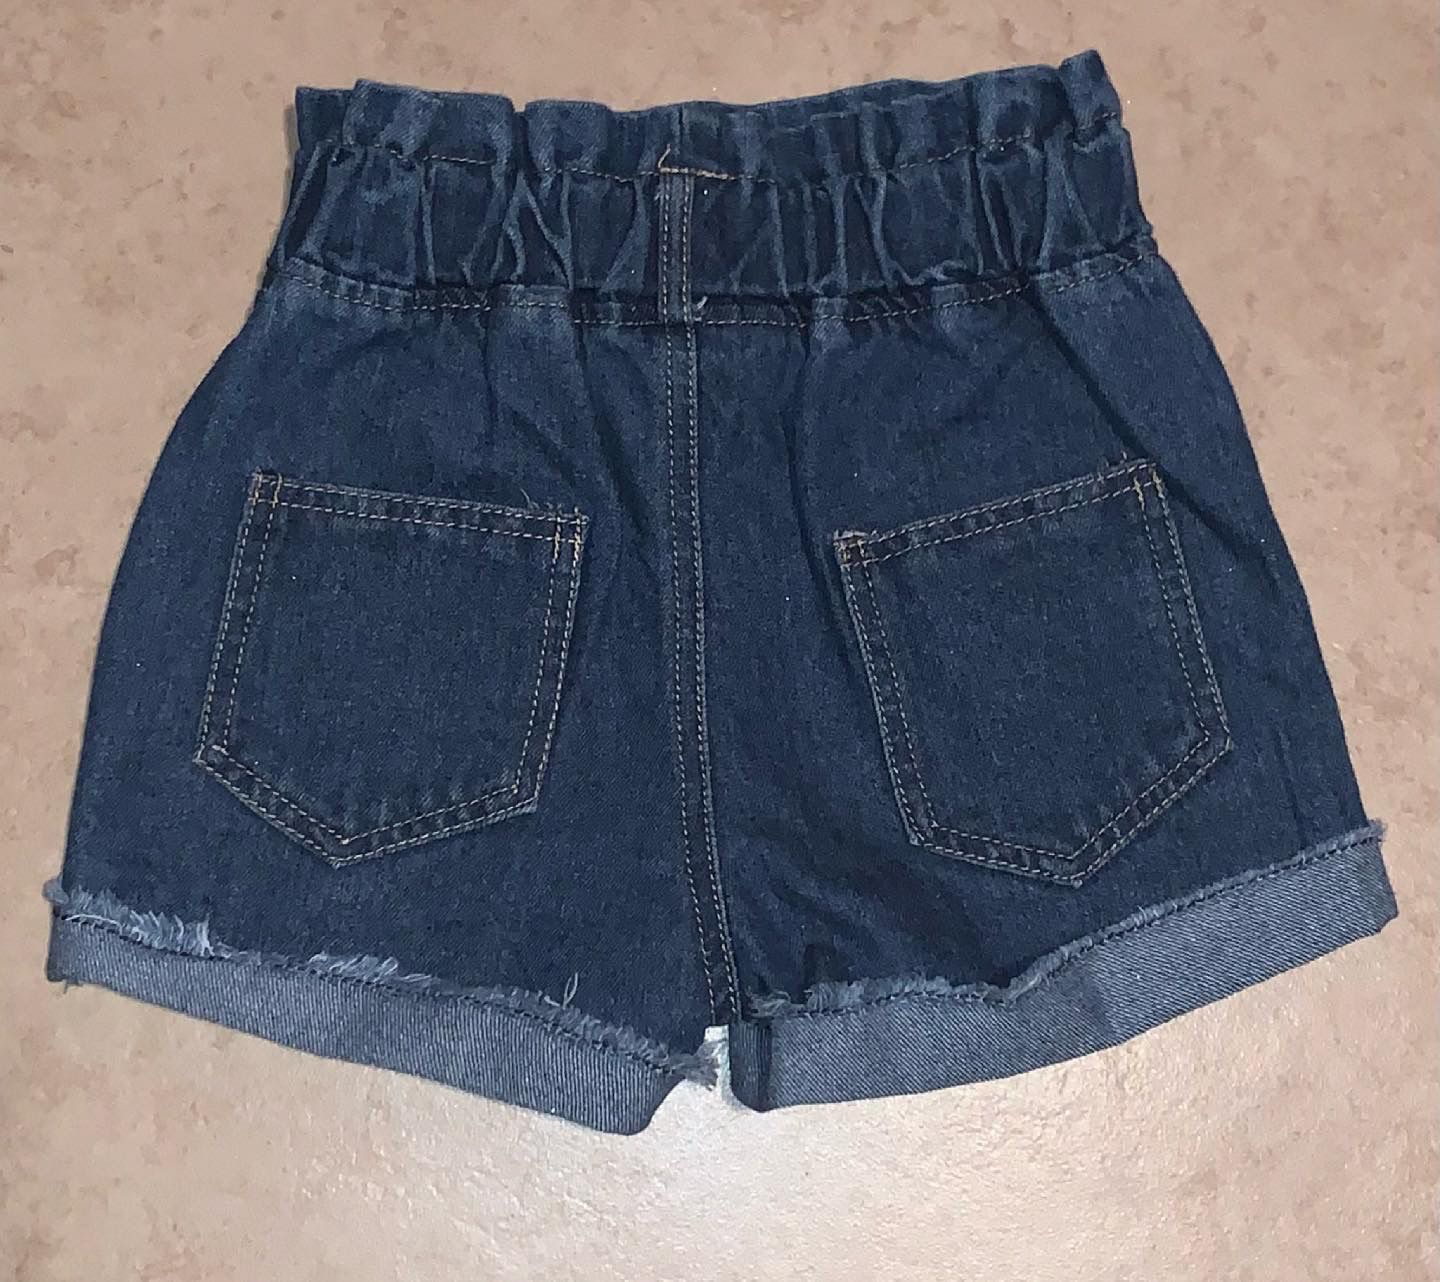 Oversized Denim Shorts for Sale in Chandler, AZ - OfferUp